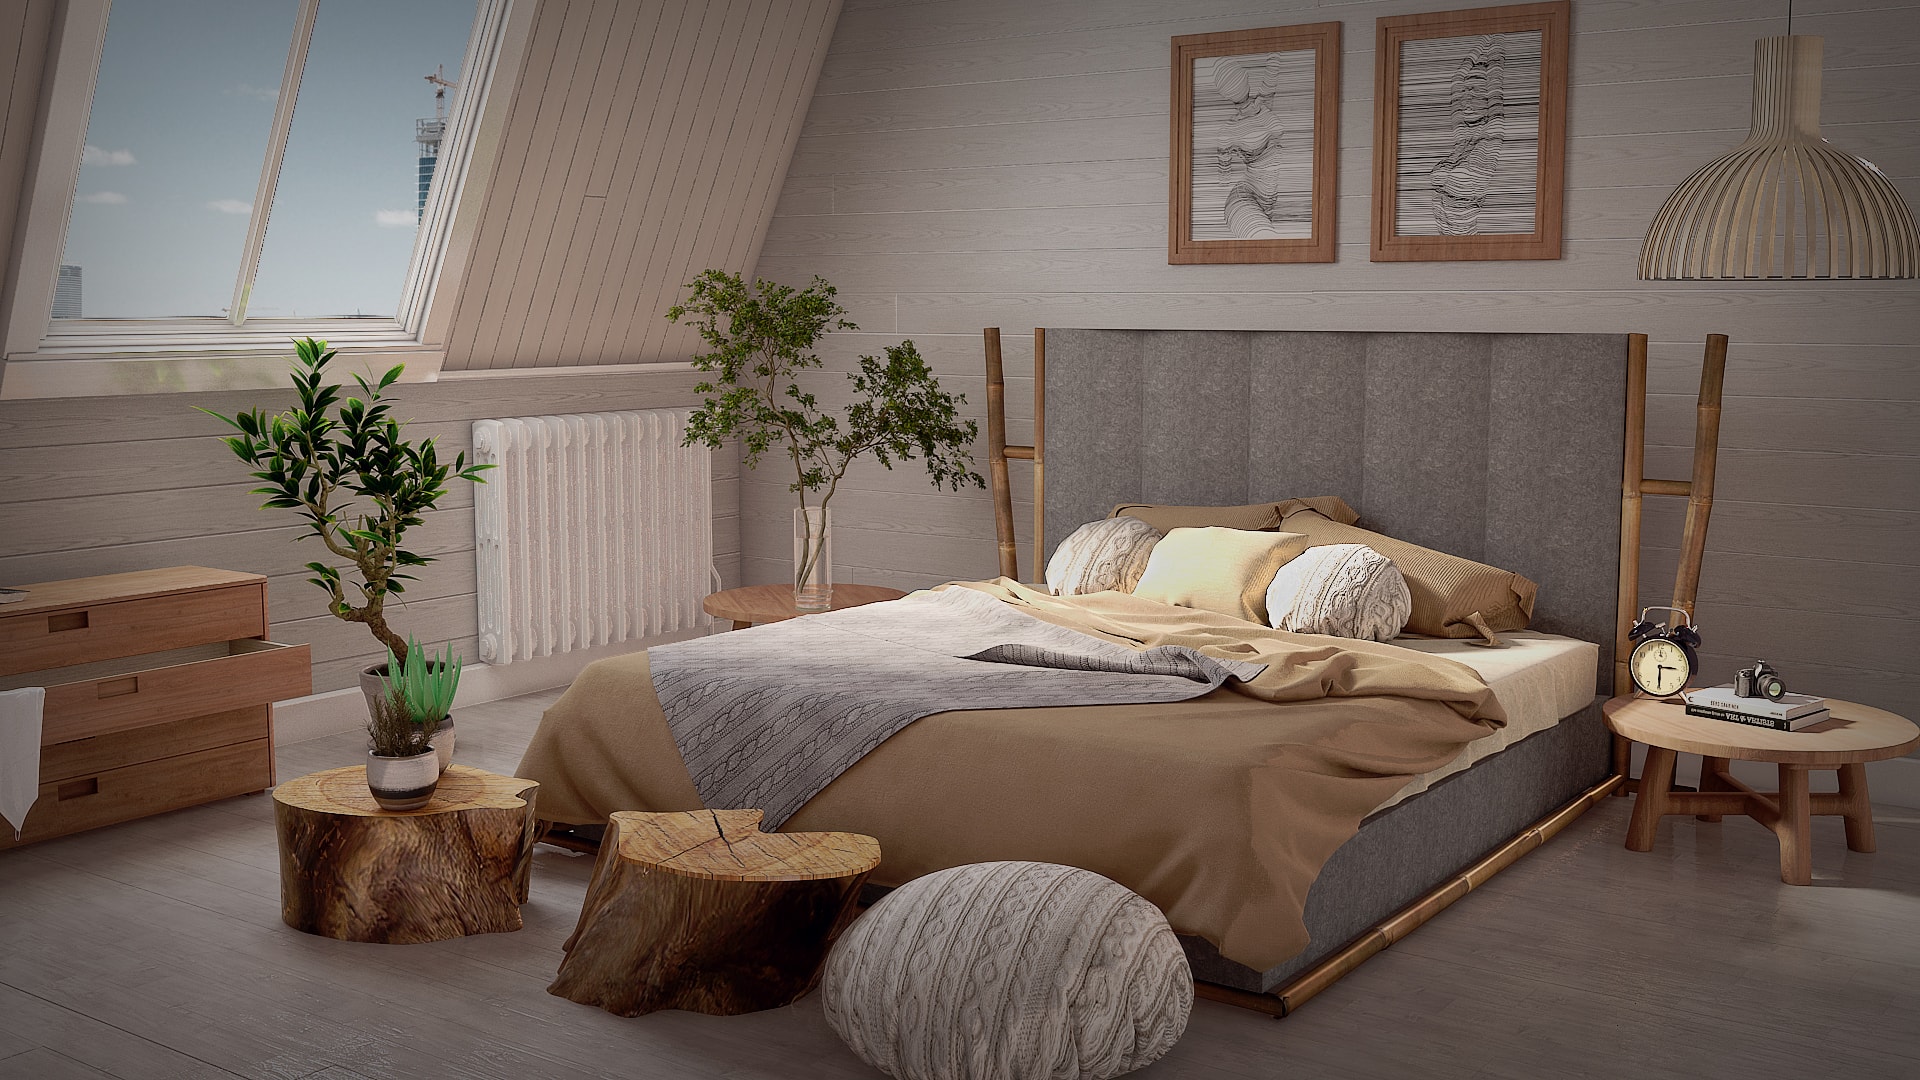 Cozy & organic Scandinavian bedroom decor ideas for 2023 by Homilo